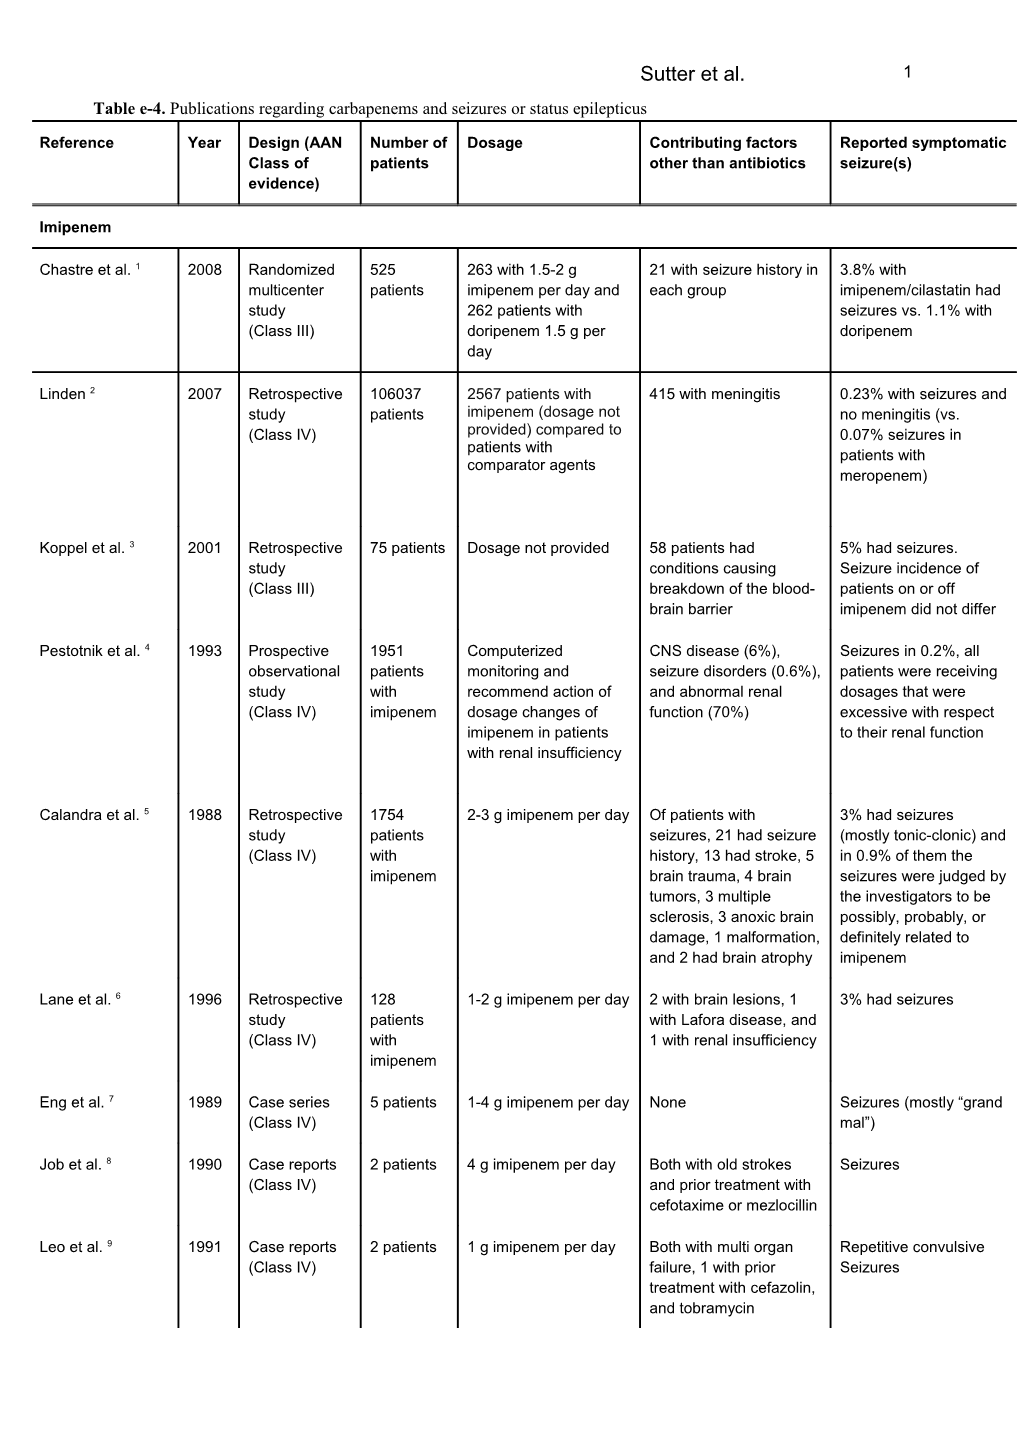 Table E-4. Publications Regarding Carbapenems and Seizures Or Status Epilepticus